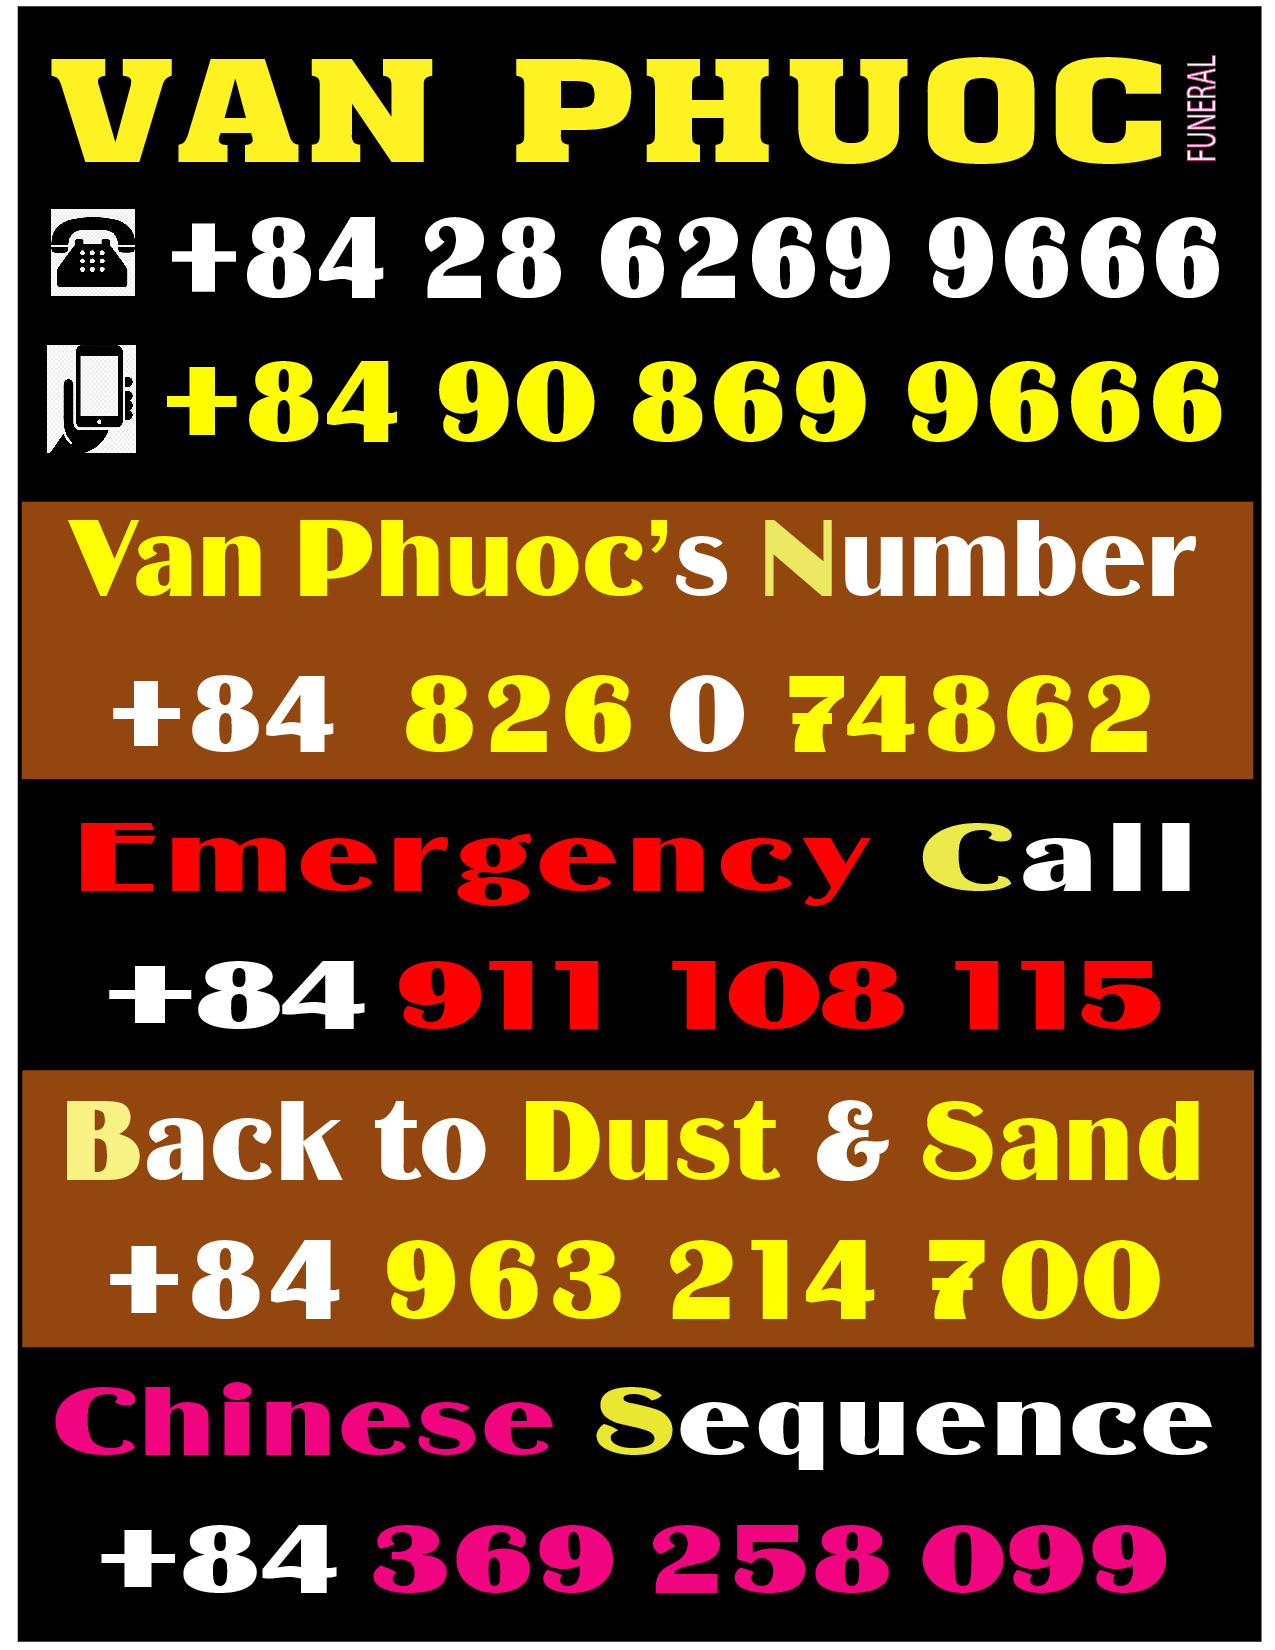 Van Phuoc Funeral - Special Numbers